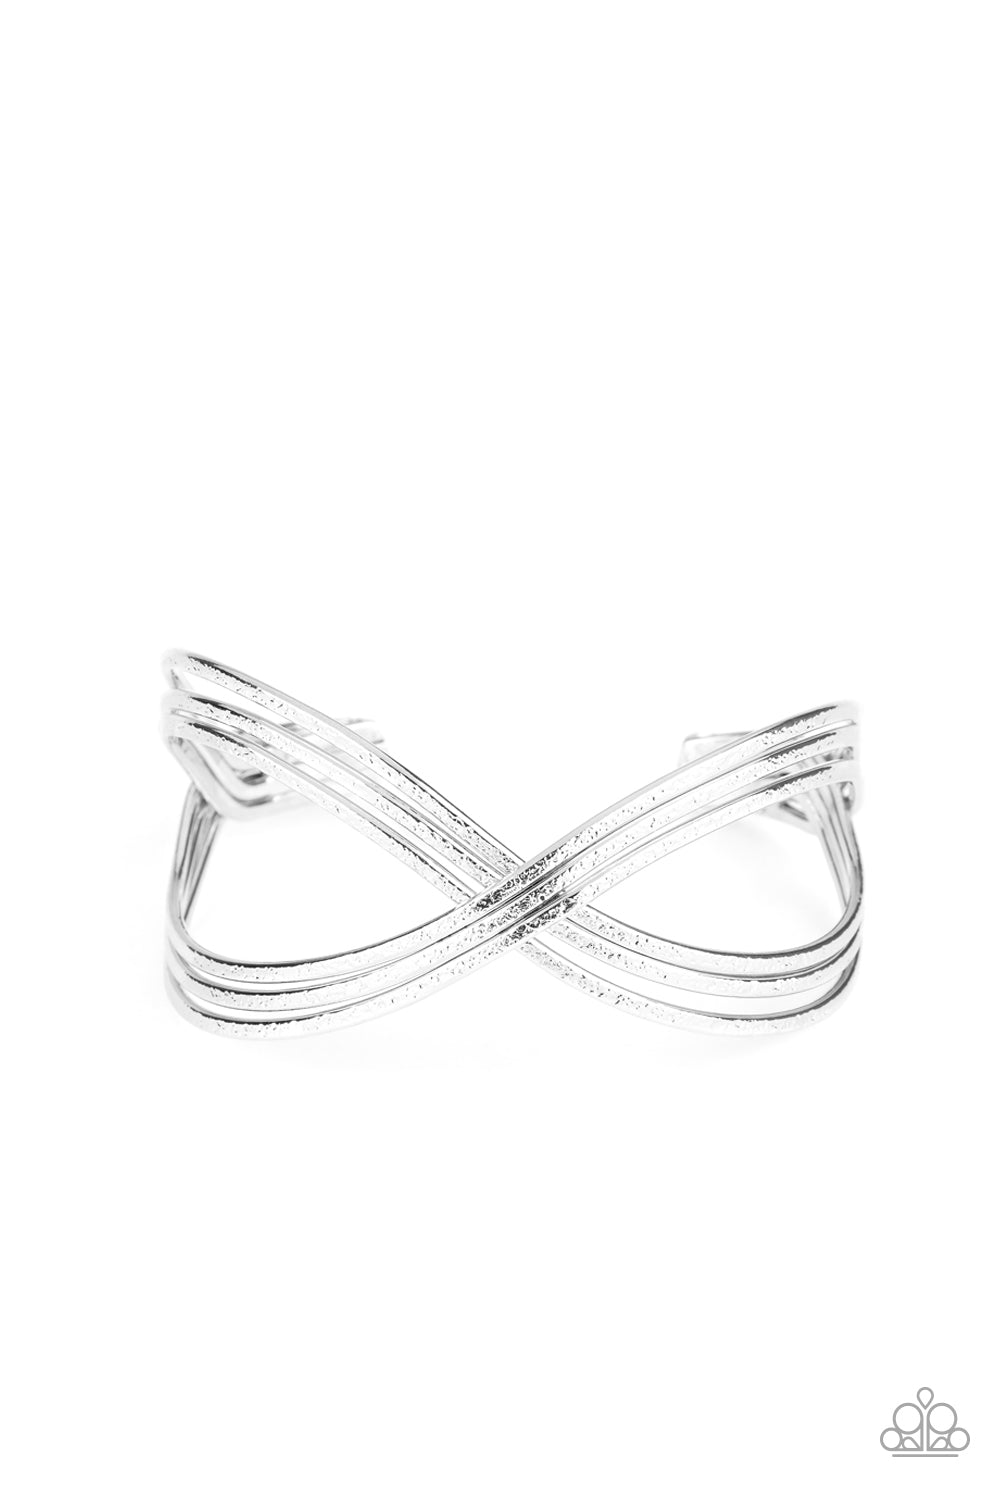 Infinitely Iridescent - Silver cuff bracelet 881